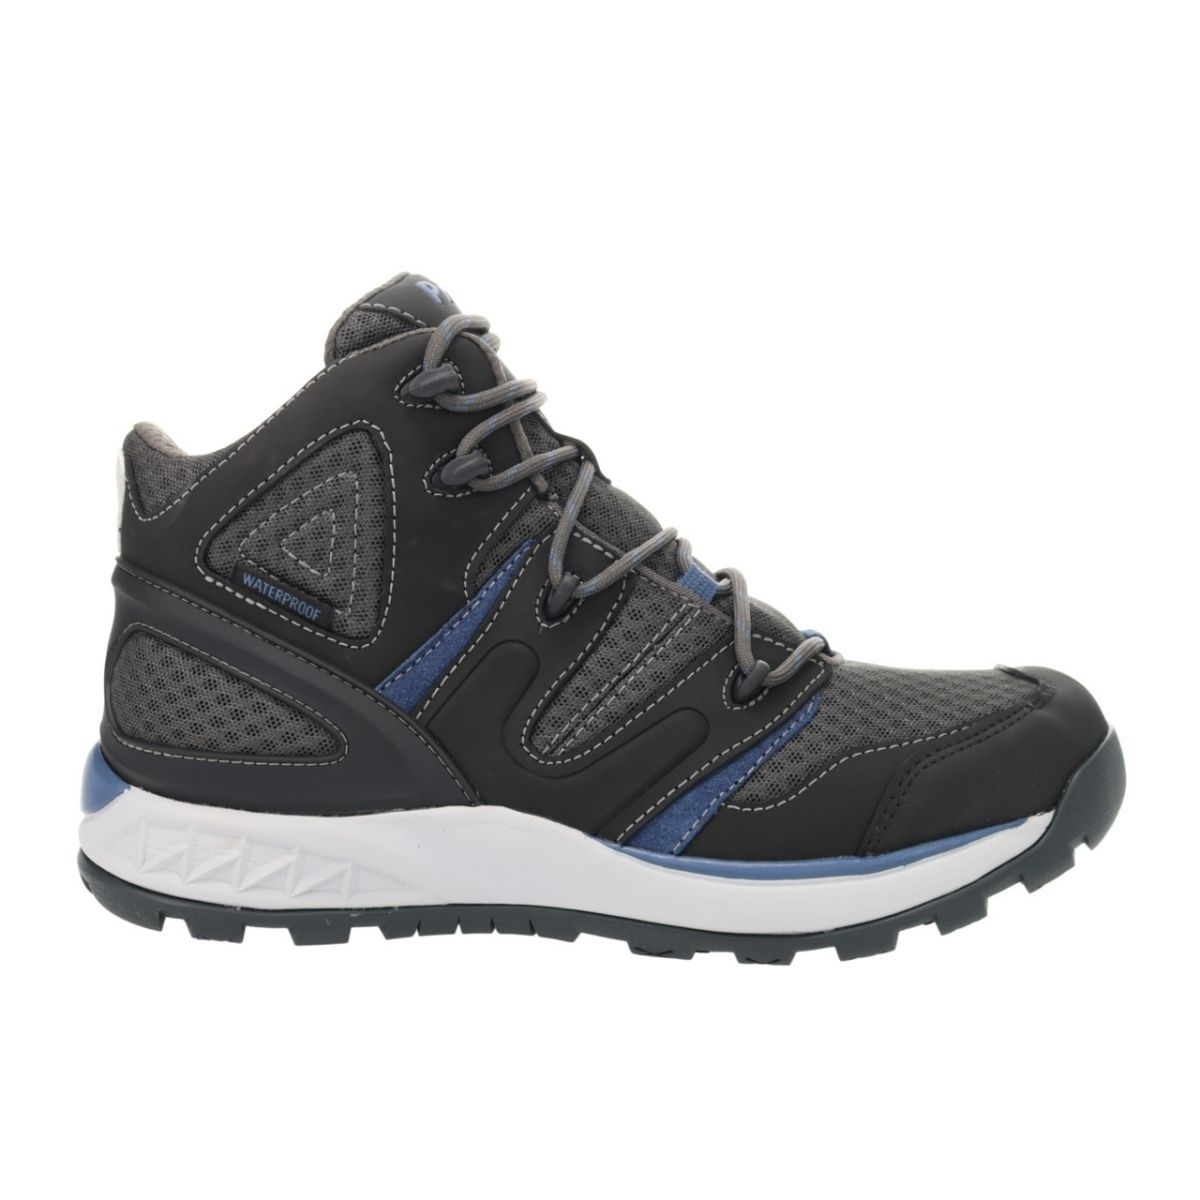 Propet Men's Veymont Waterproof Hiking Boot Grey/Blue - MOA022SGRB GREY/BLUE - GREY/BLUE, 11.5 X-Wide